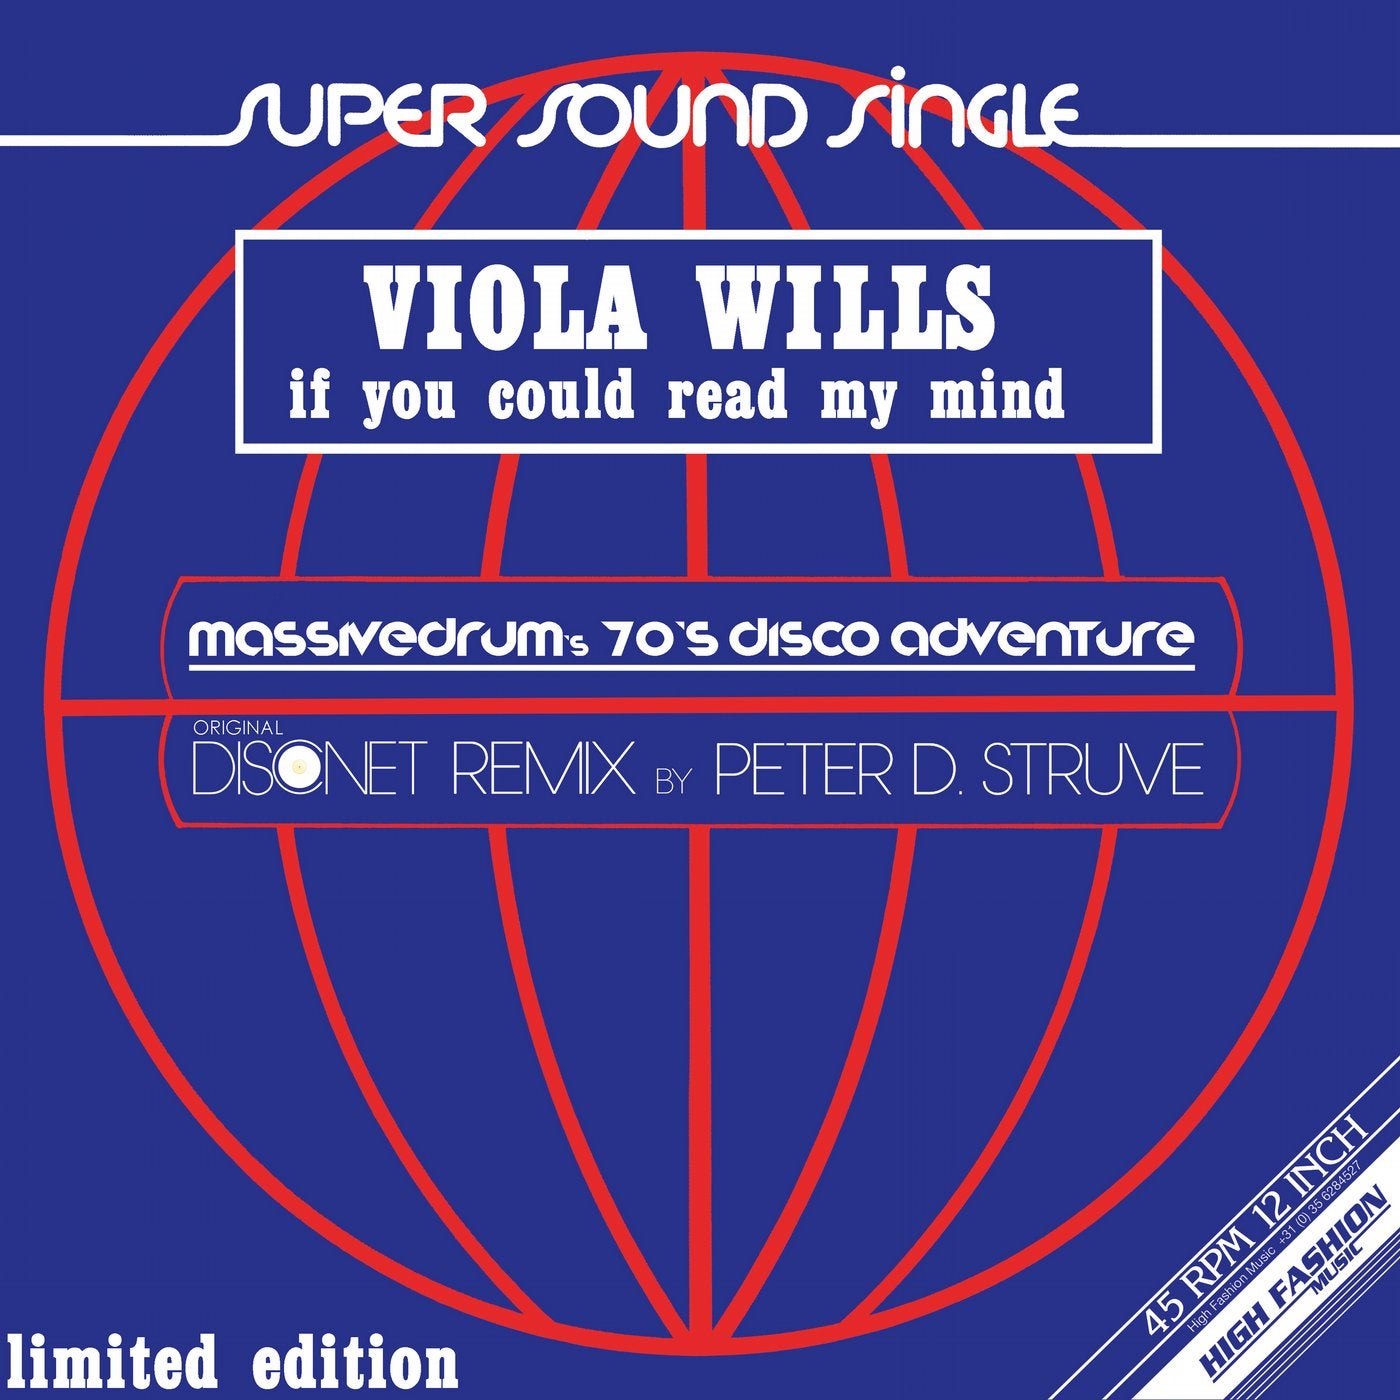 Viola wills. If you could read my Mind. Viola wills CD albums. Viola wills poster.